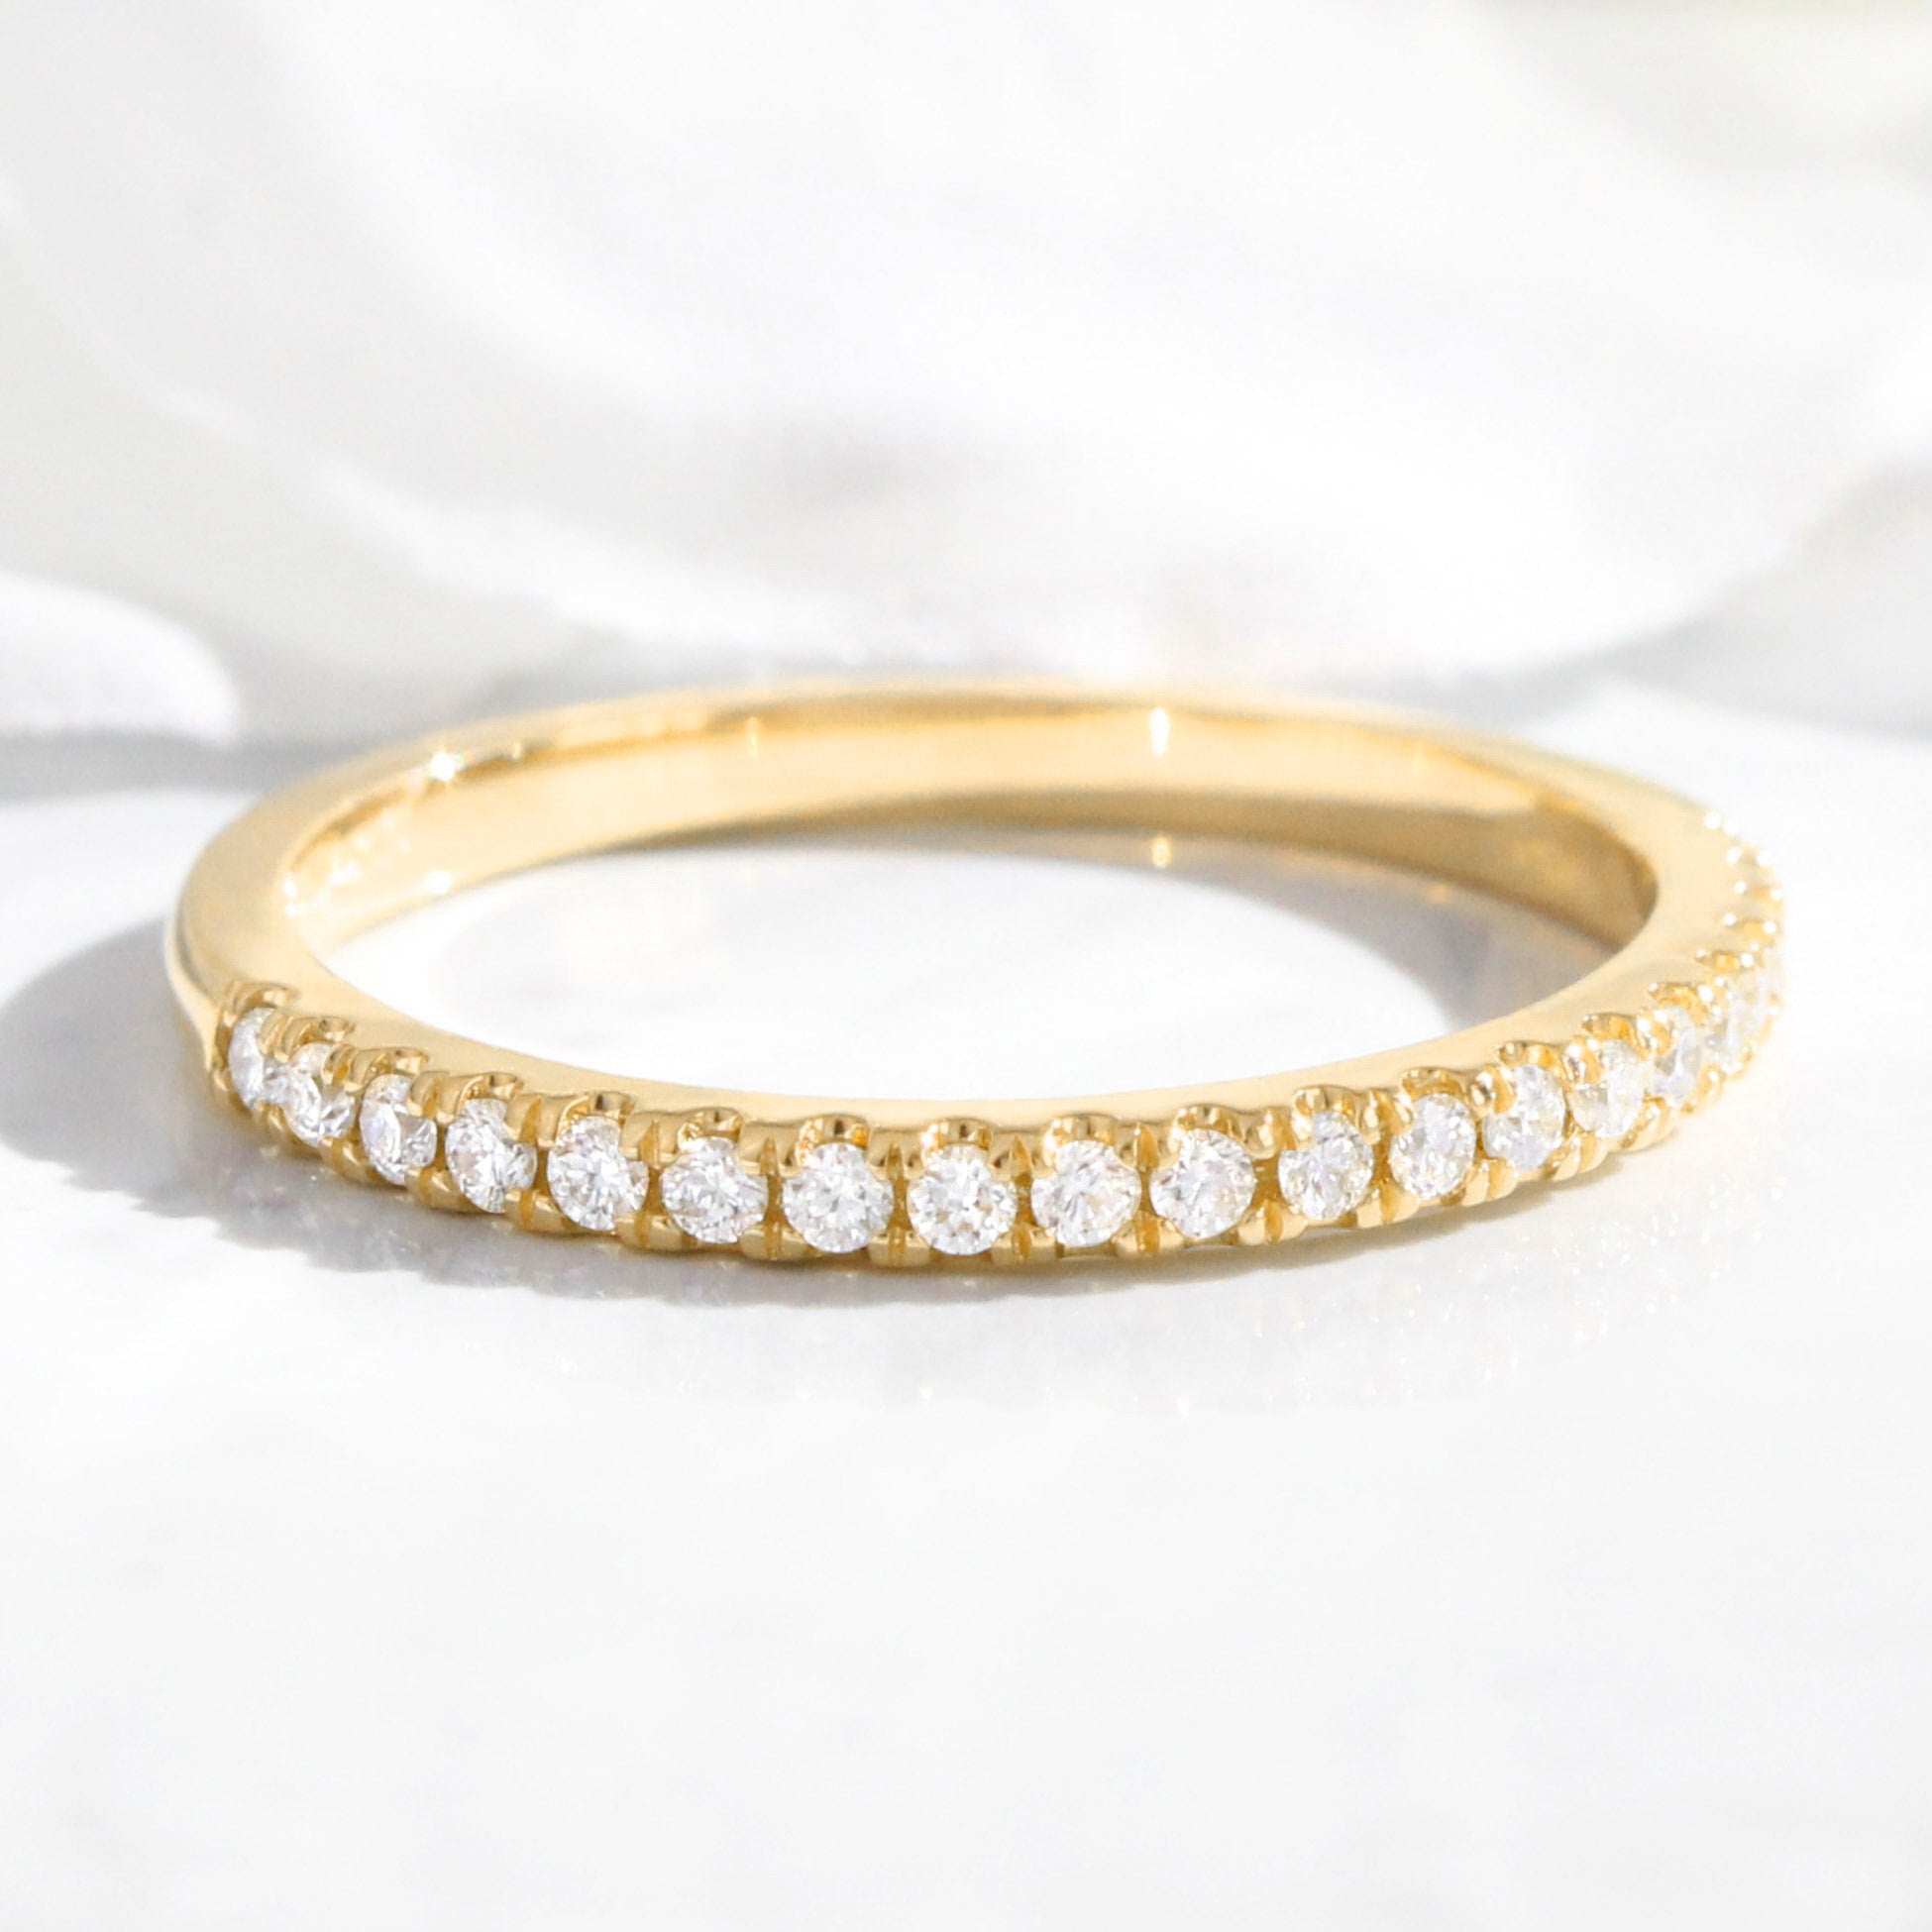 Pave diamond wedding ring yellow gold half eternity wedding band la more design jewelry